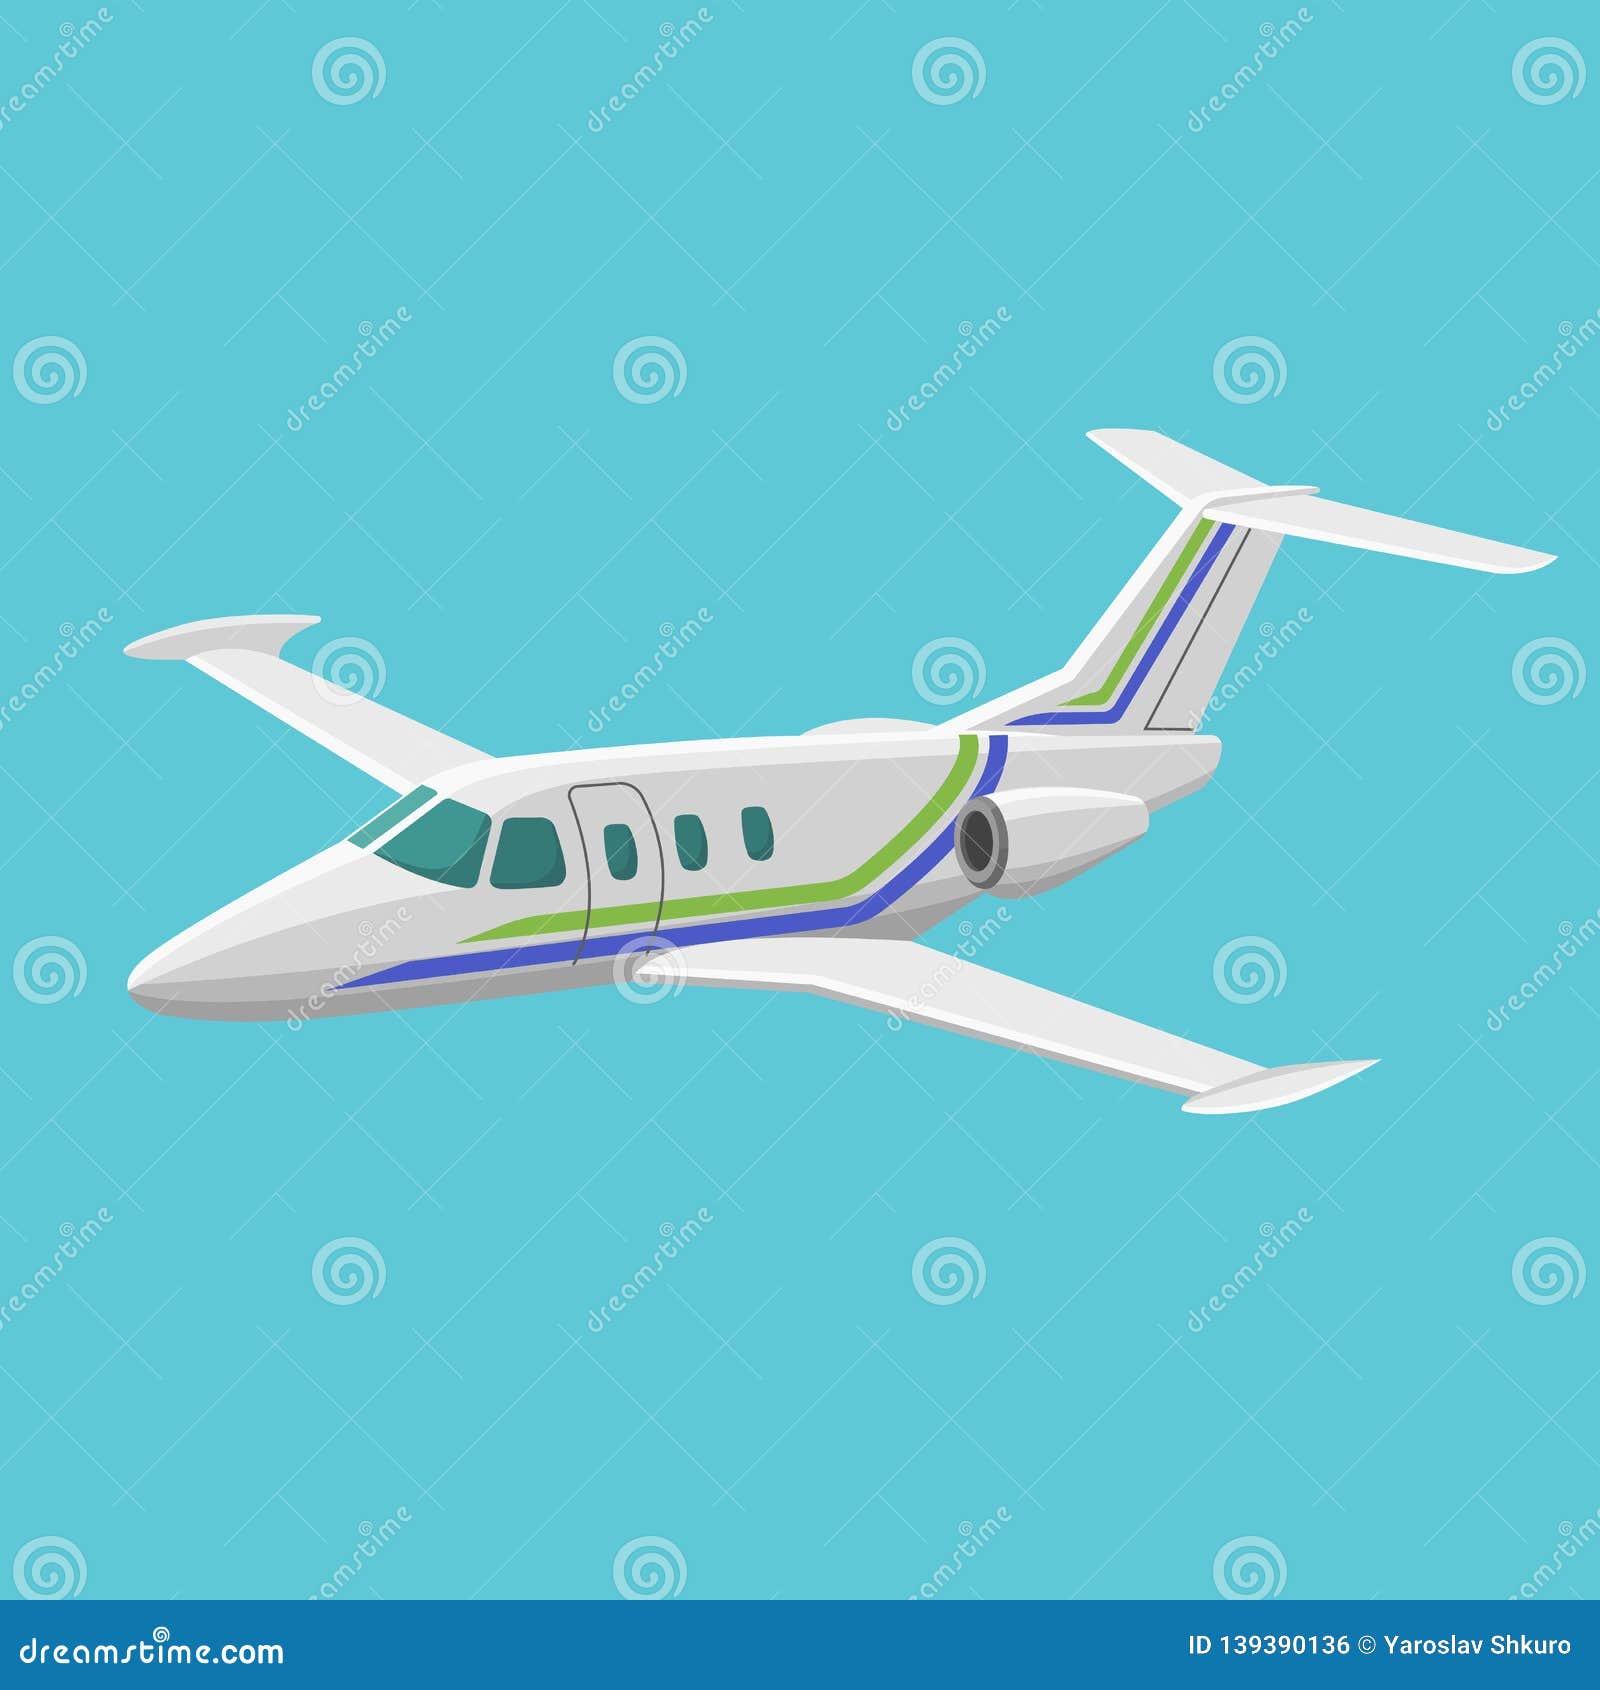 Plane Mini: Over 722 Royalty-Free Licensable Stock Vectors & Vector Art